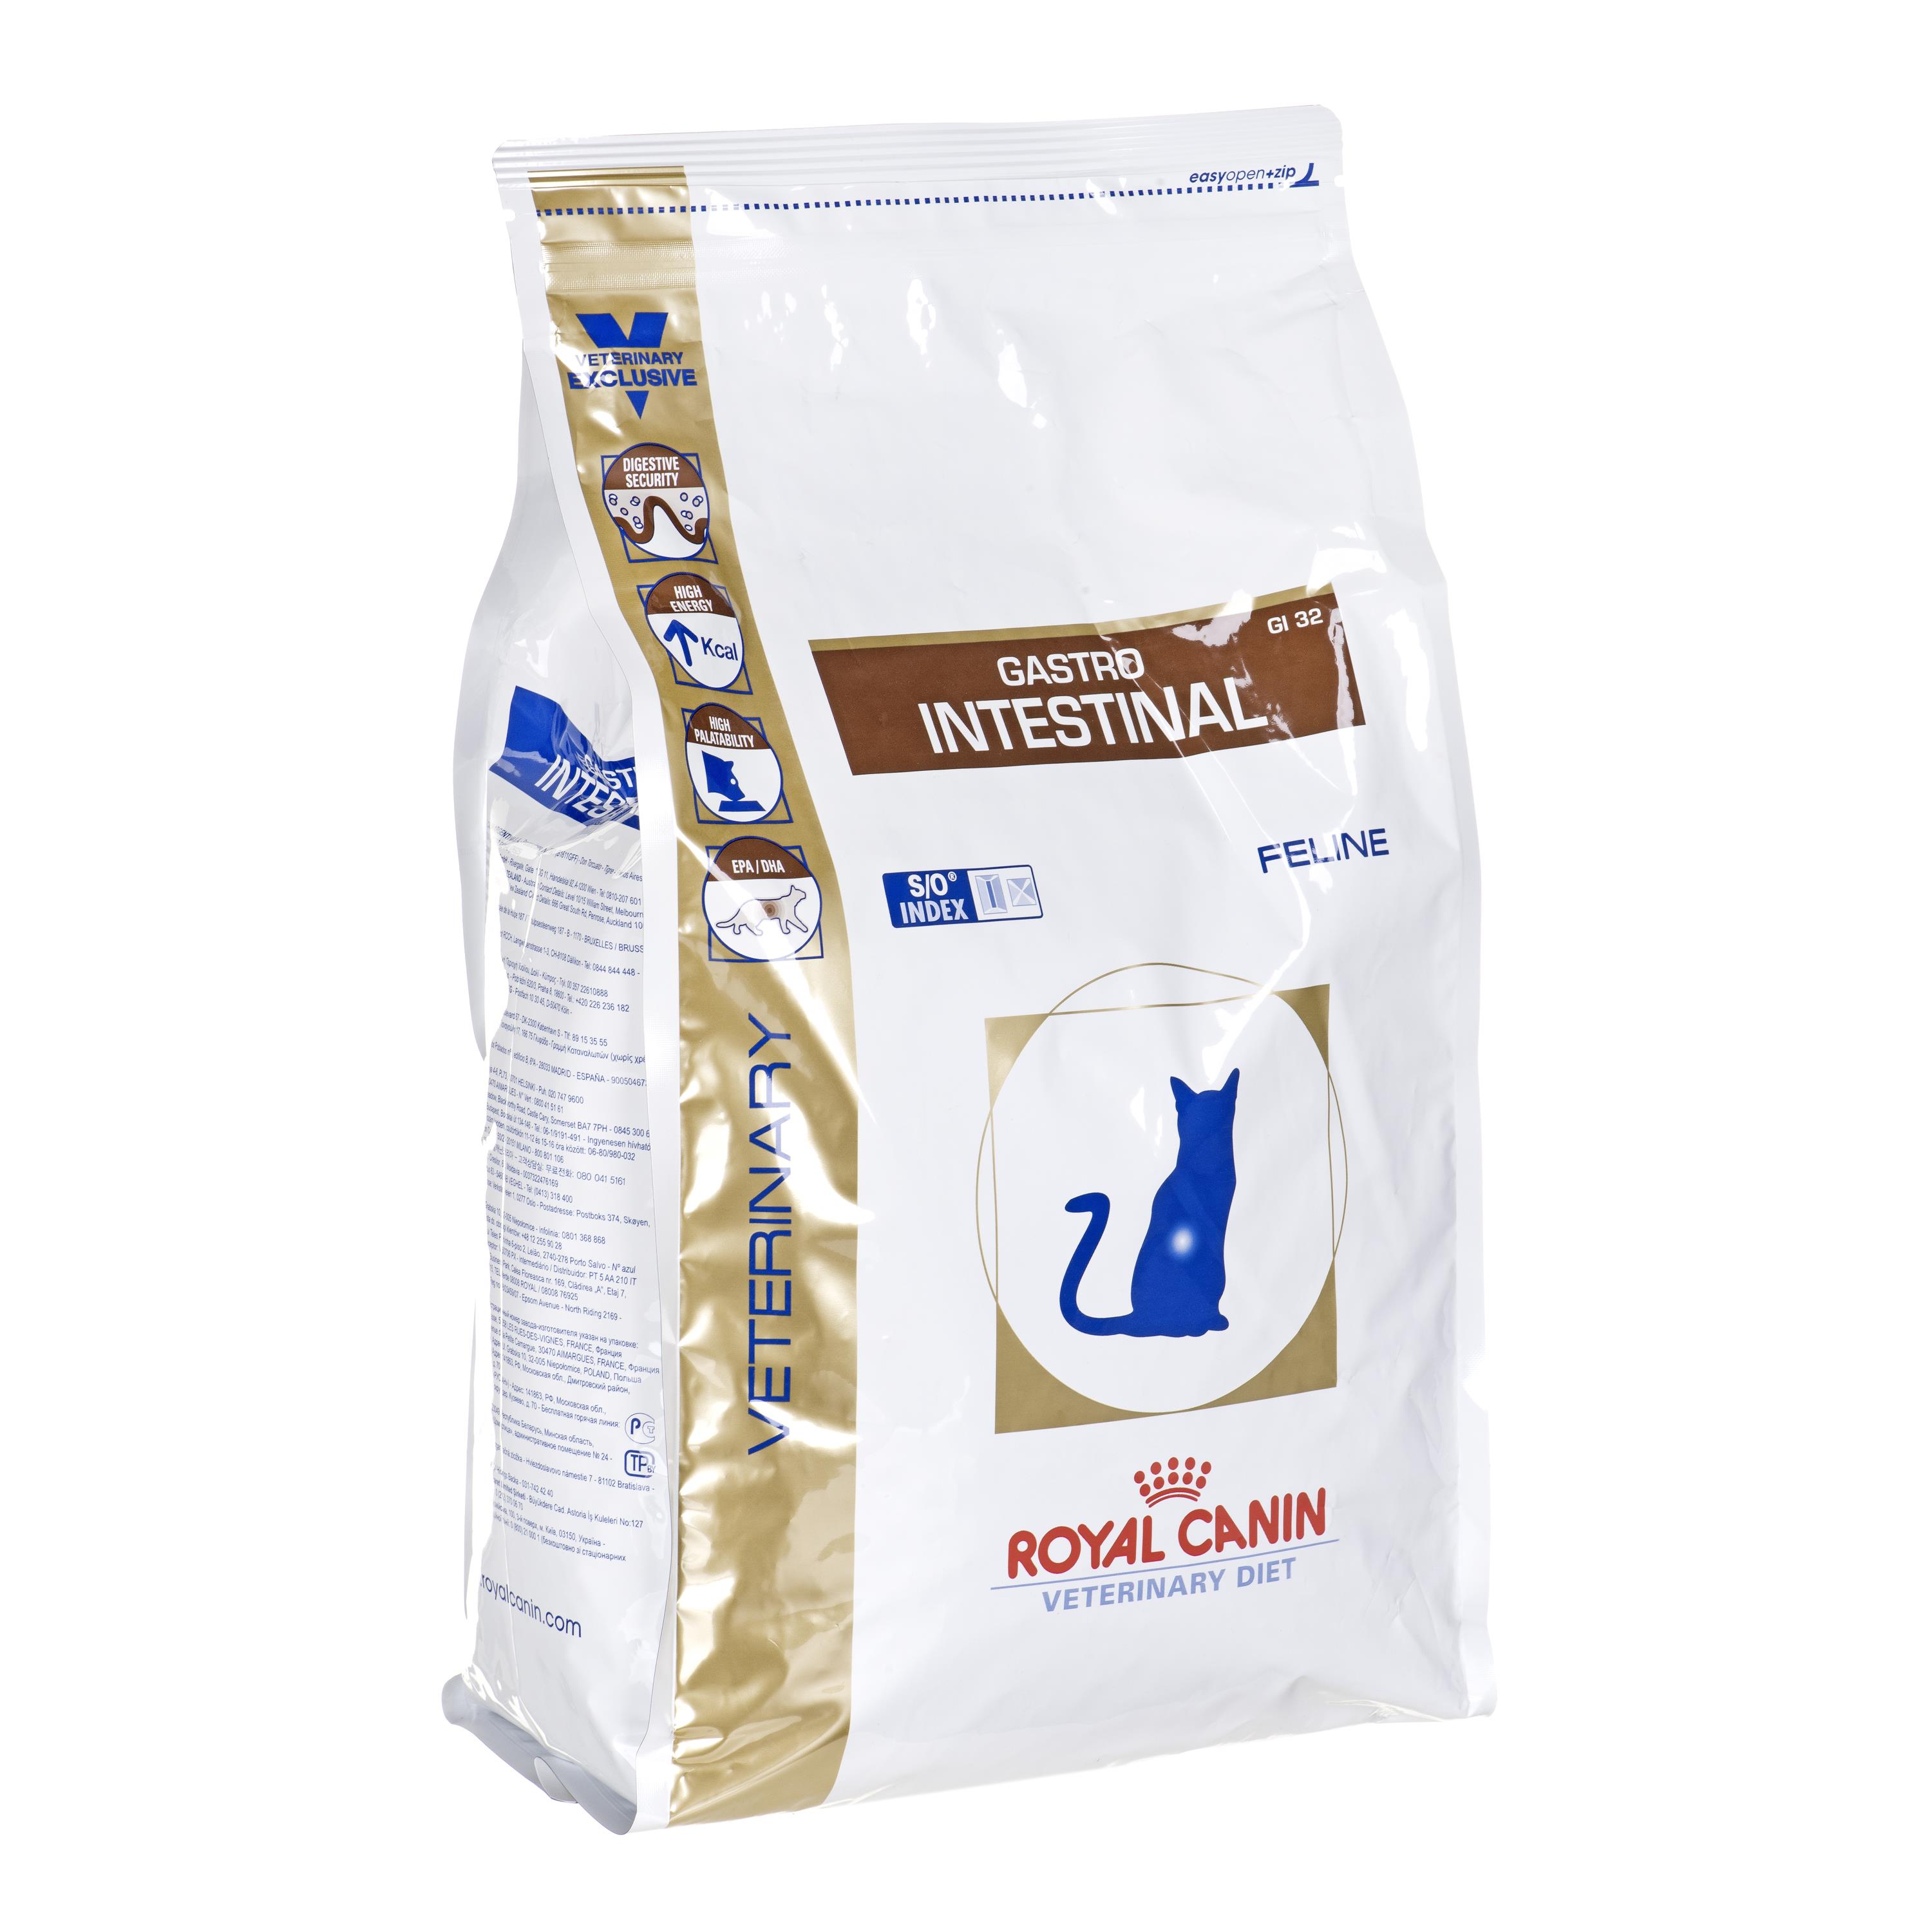 Роял канин гастро. Royal Canin Gastro intestinal для кошек. Royal Canin VD Gastro intestinal для кошек. РК 0,4 кг гастро-Интестинал 32 д/кошек. Гастро Интестинал Фелин 0.4 кг.